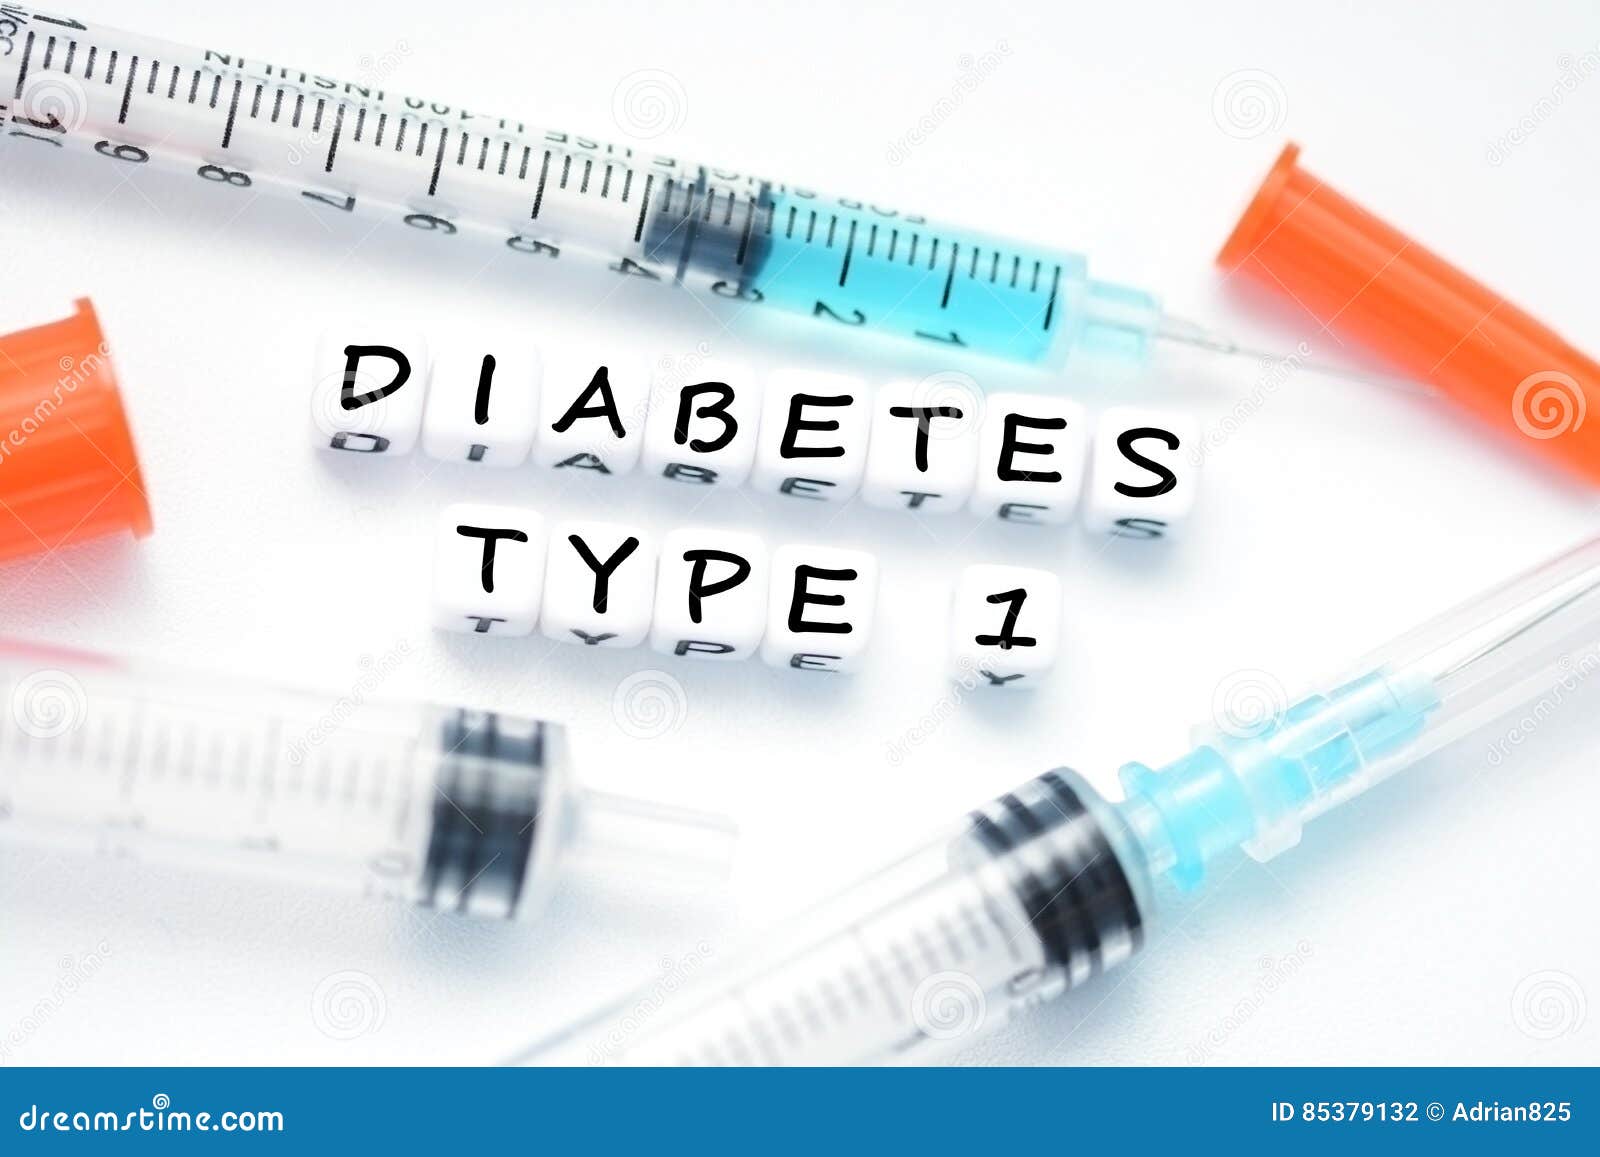 type 1 diabetes metaphor suggested by insulin syringe